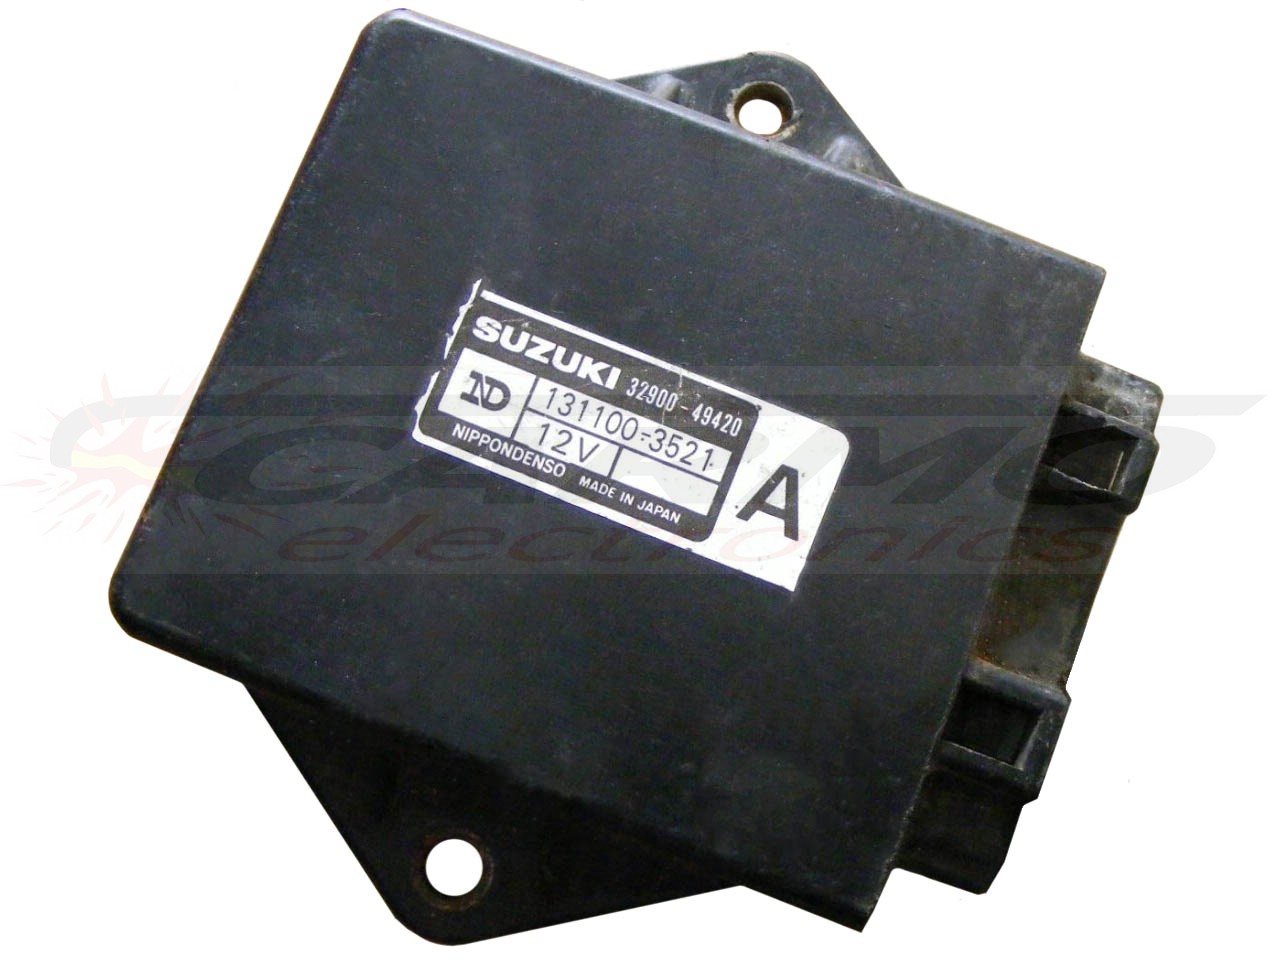 GSXR1100 TCI CDI dispositif de commande boîte noire (131100-3521)